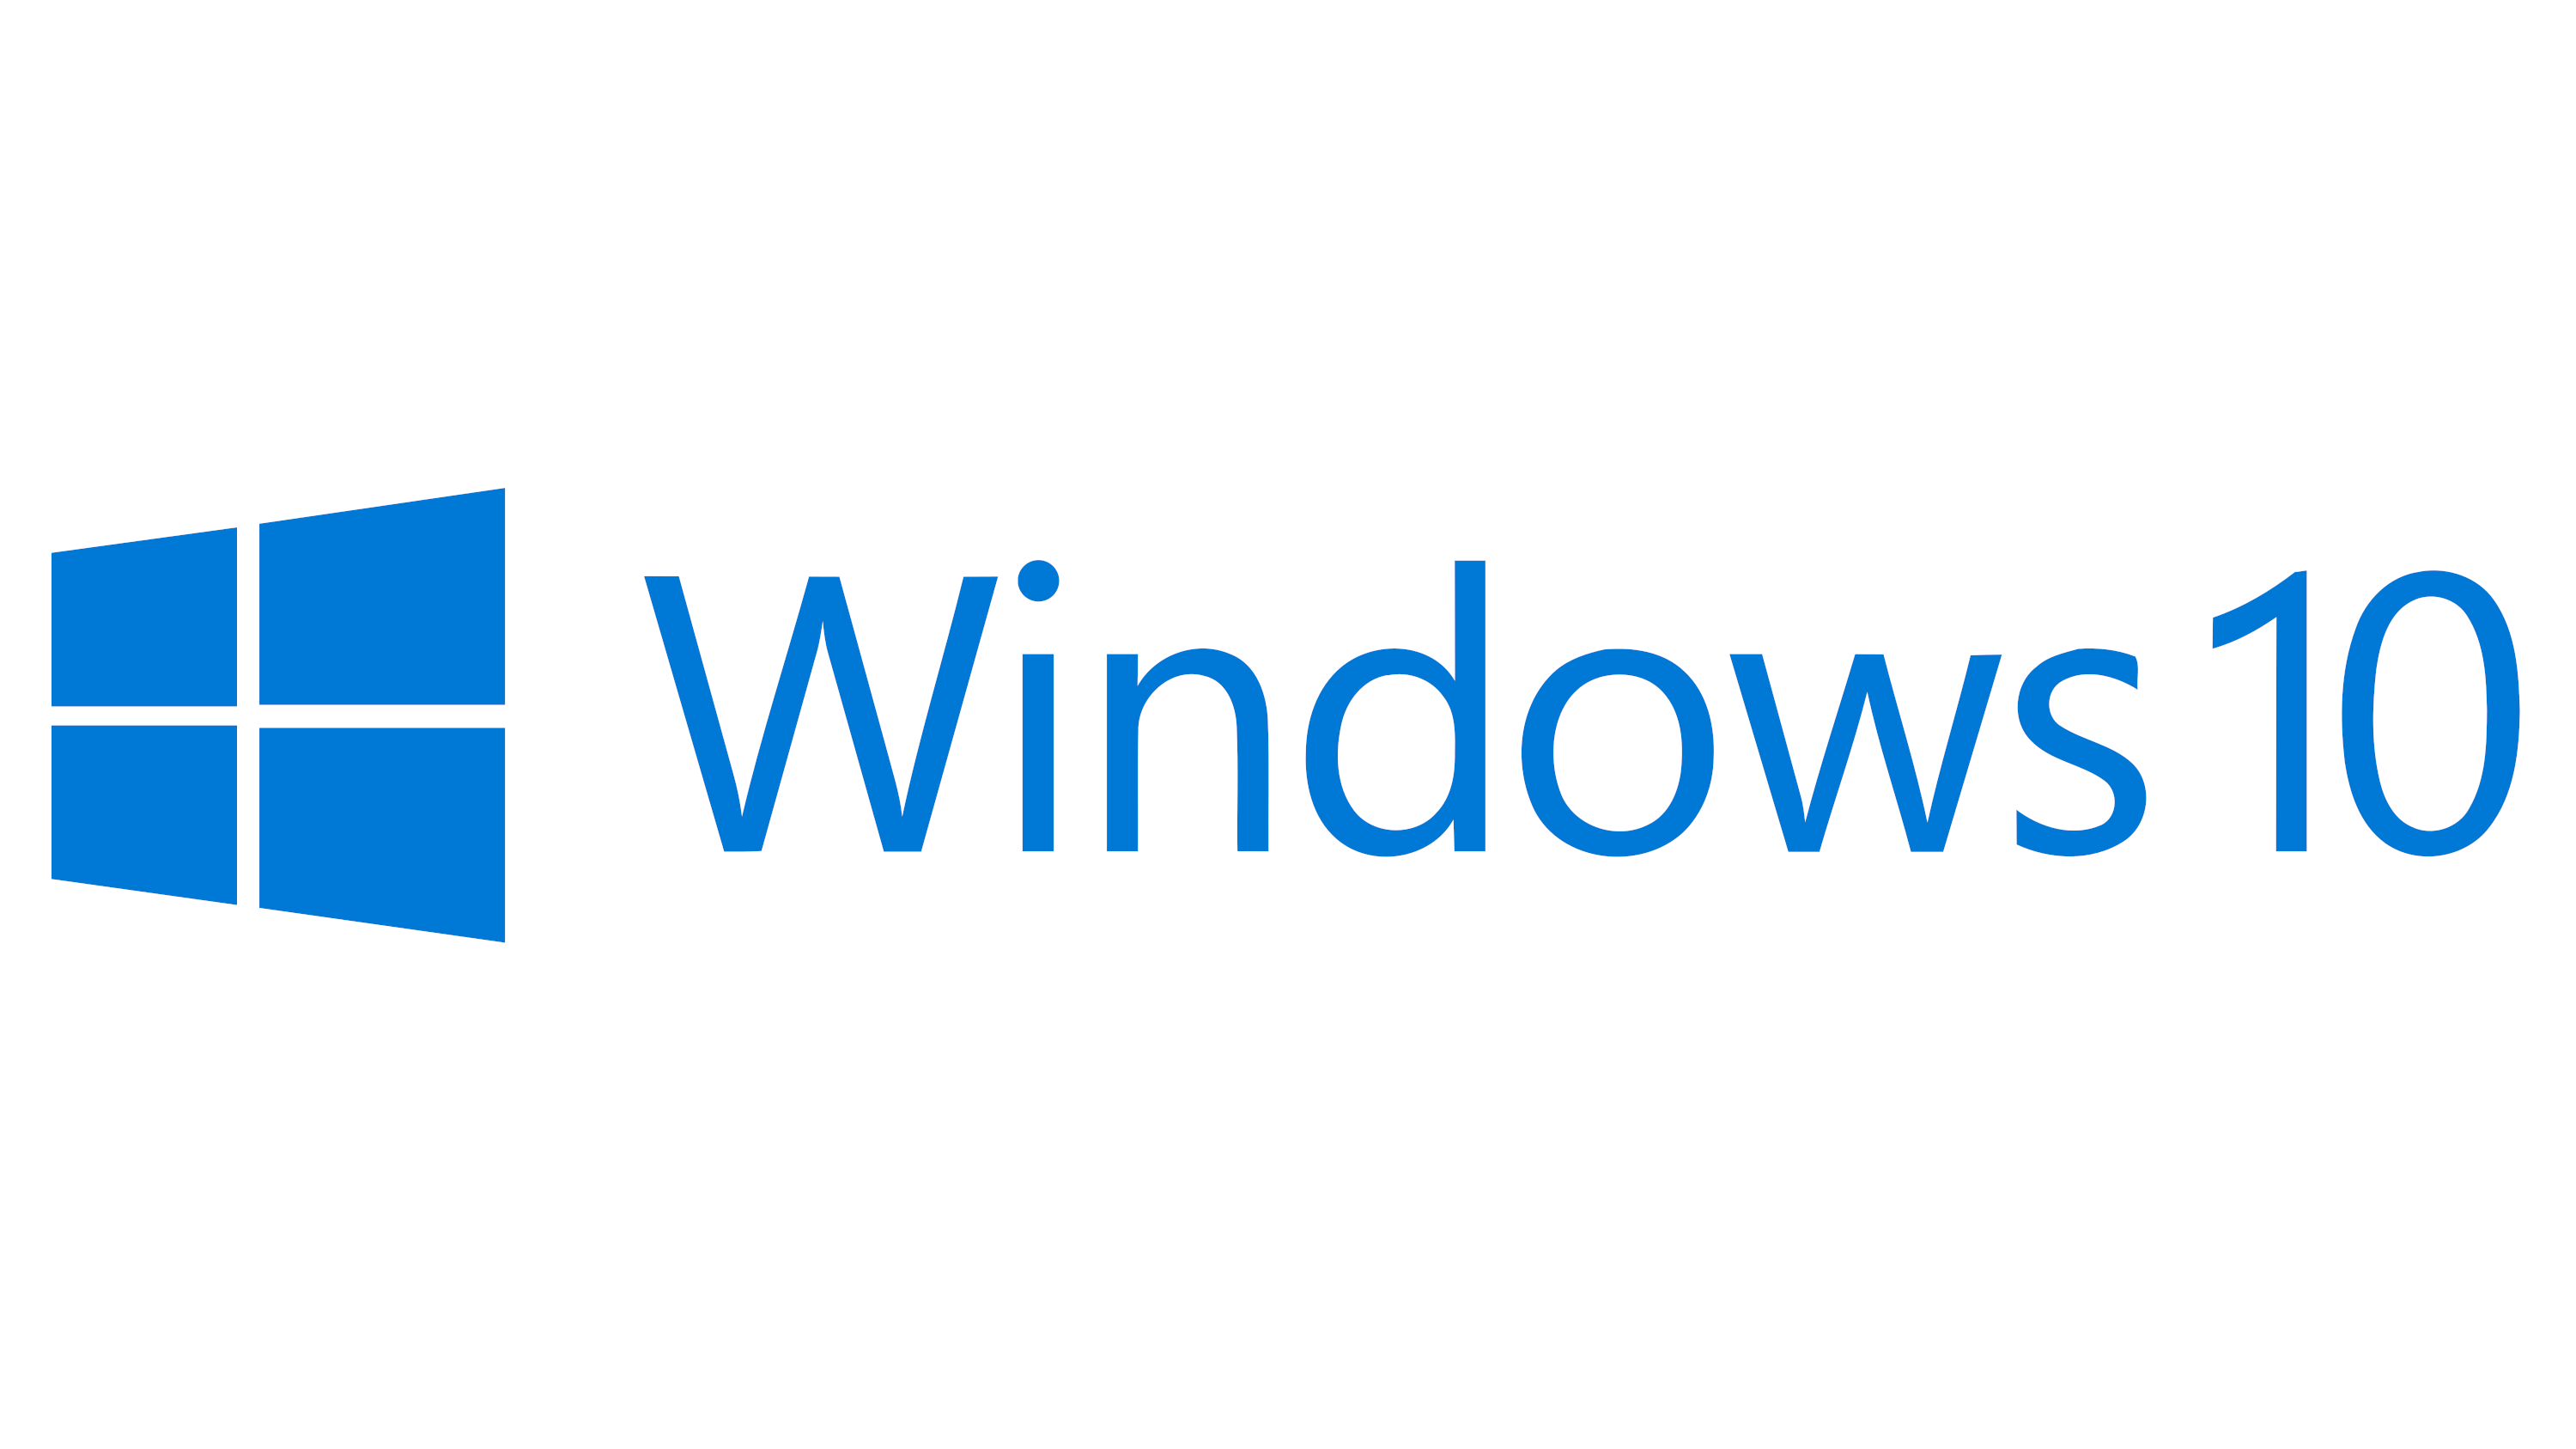 Microsoft Windows 10 - Defender carousel image